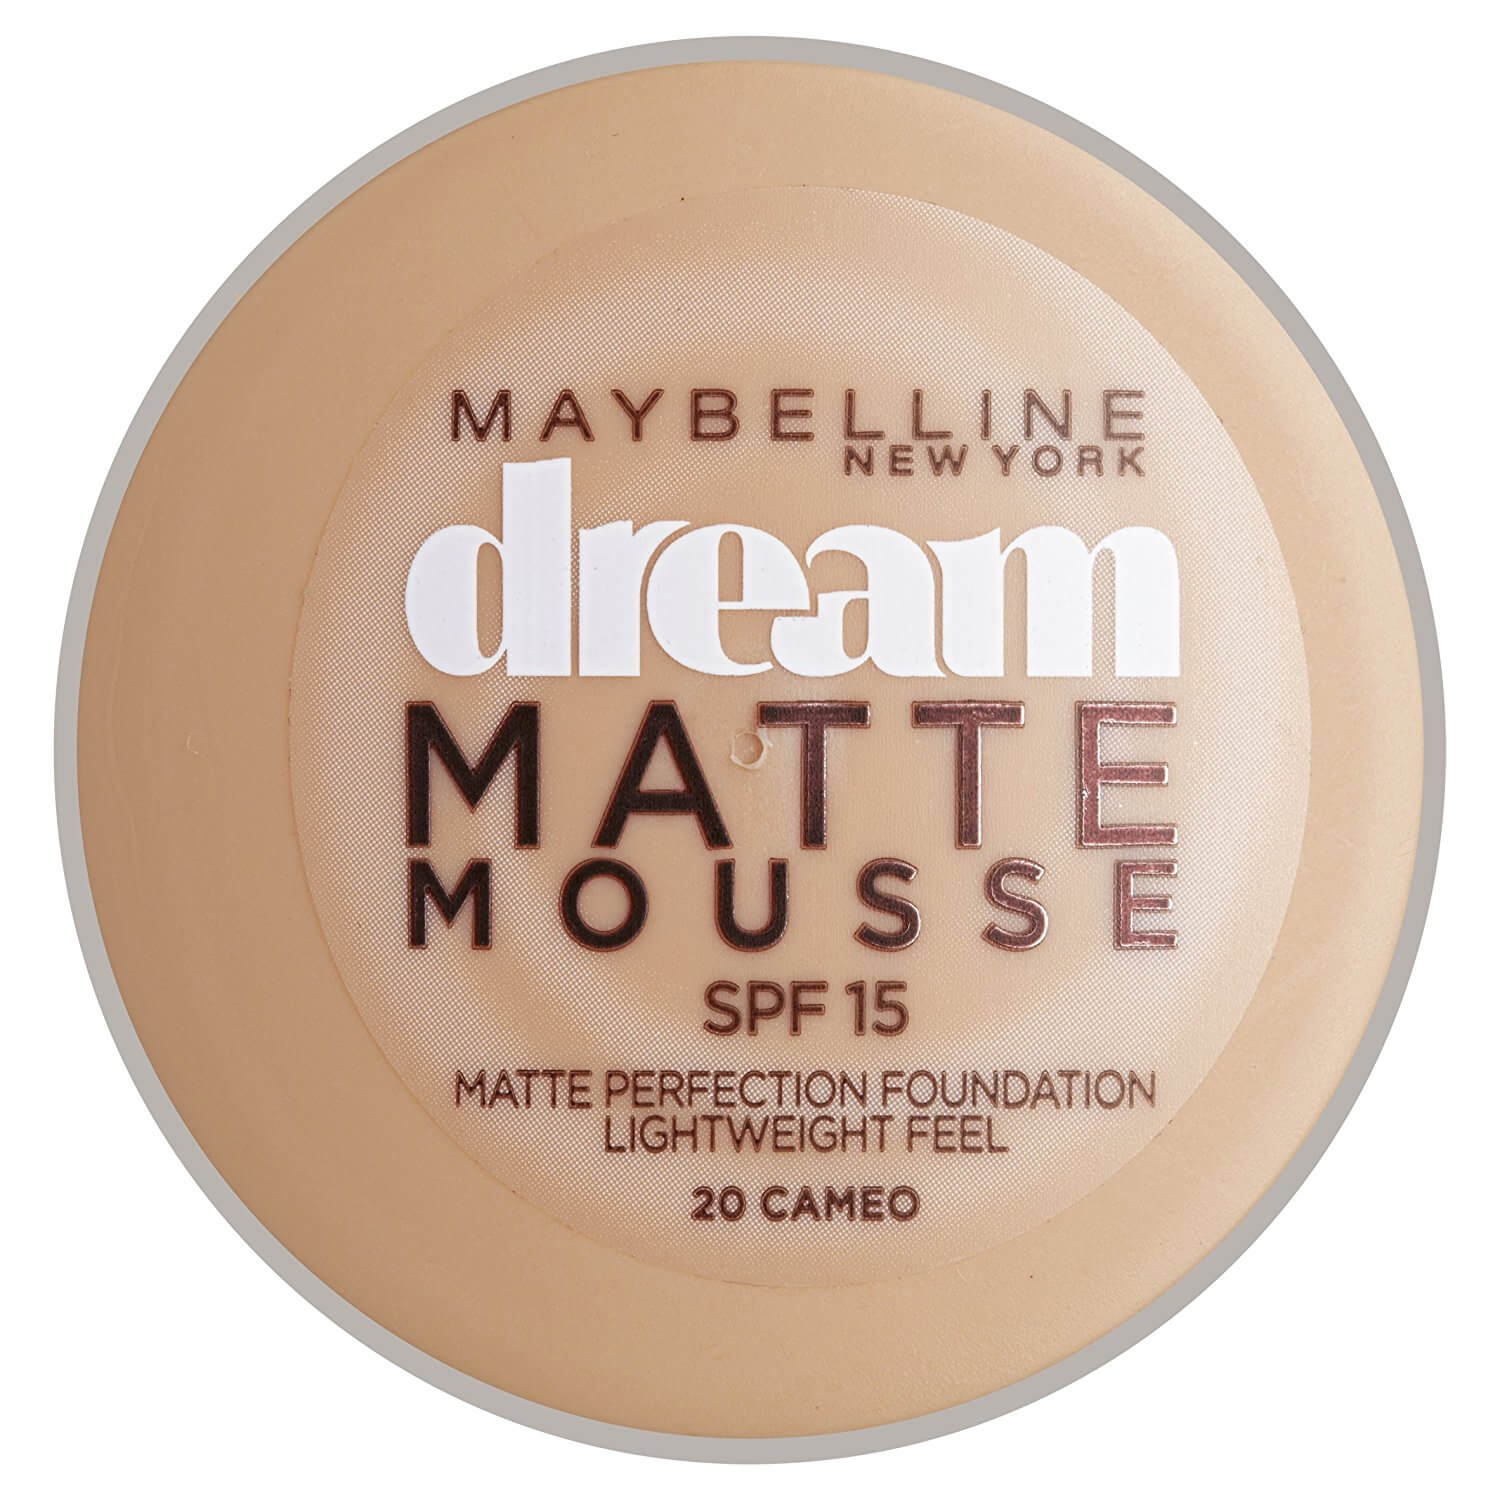 Maybelline Dream Matte Mousse SPF 15 20 Cameo